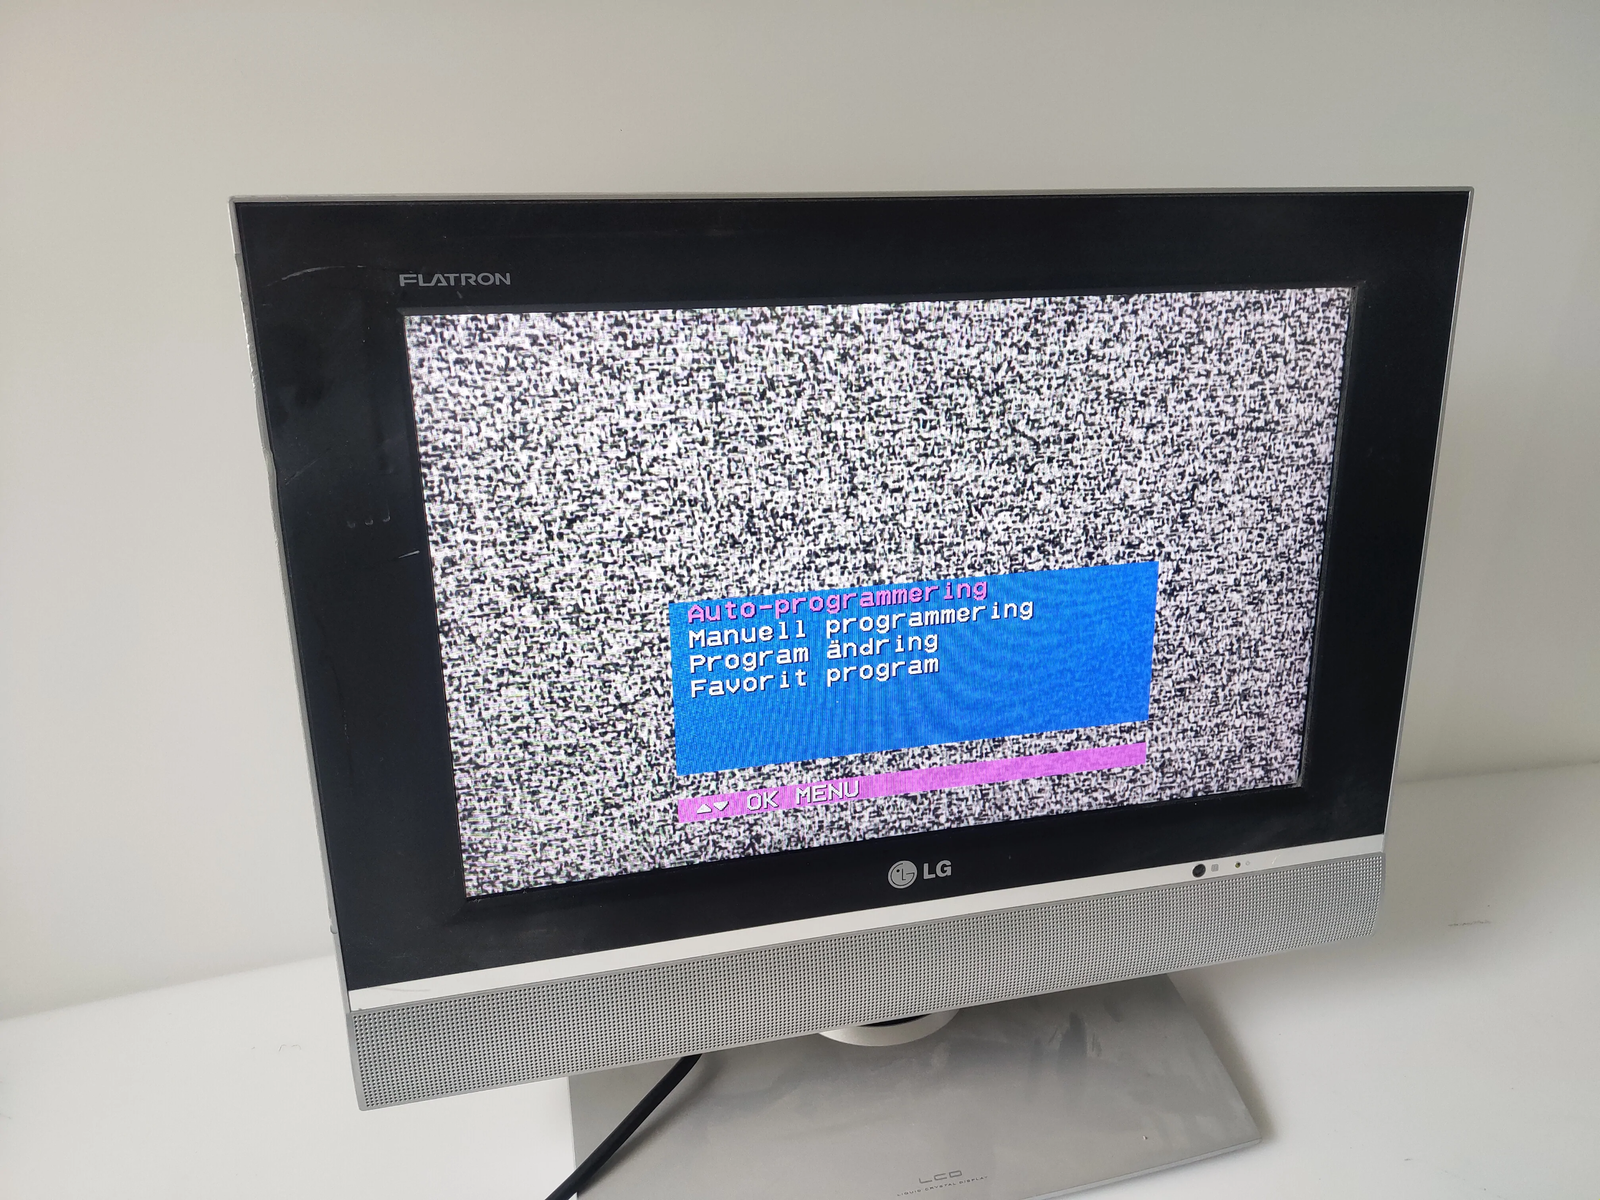 MATRIX (LCD PANEL) – LC171W03 (A4)(K7) for LG RZ-17LZ40